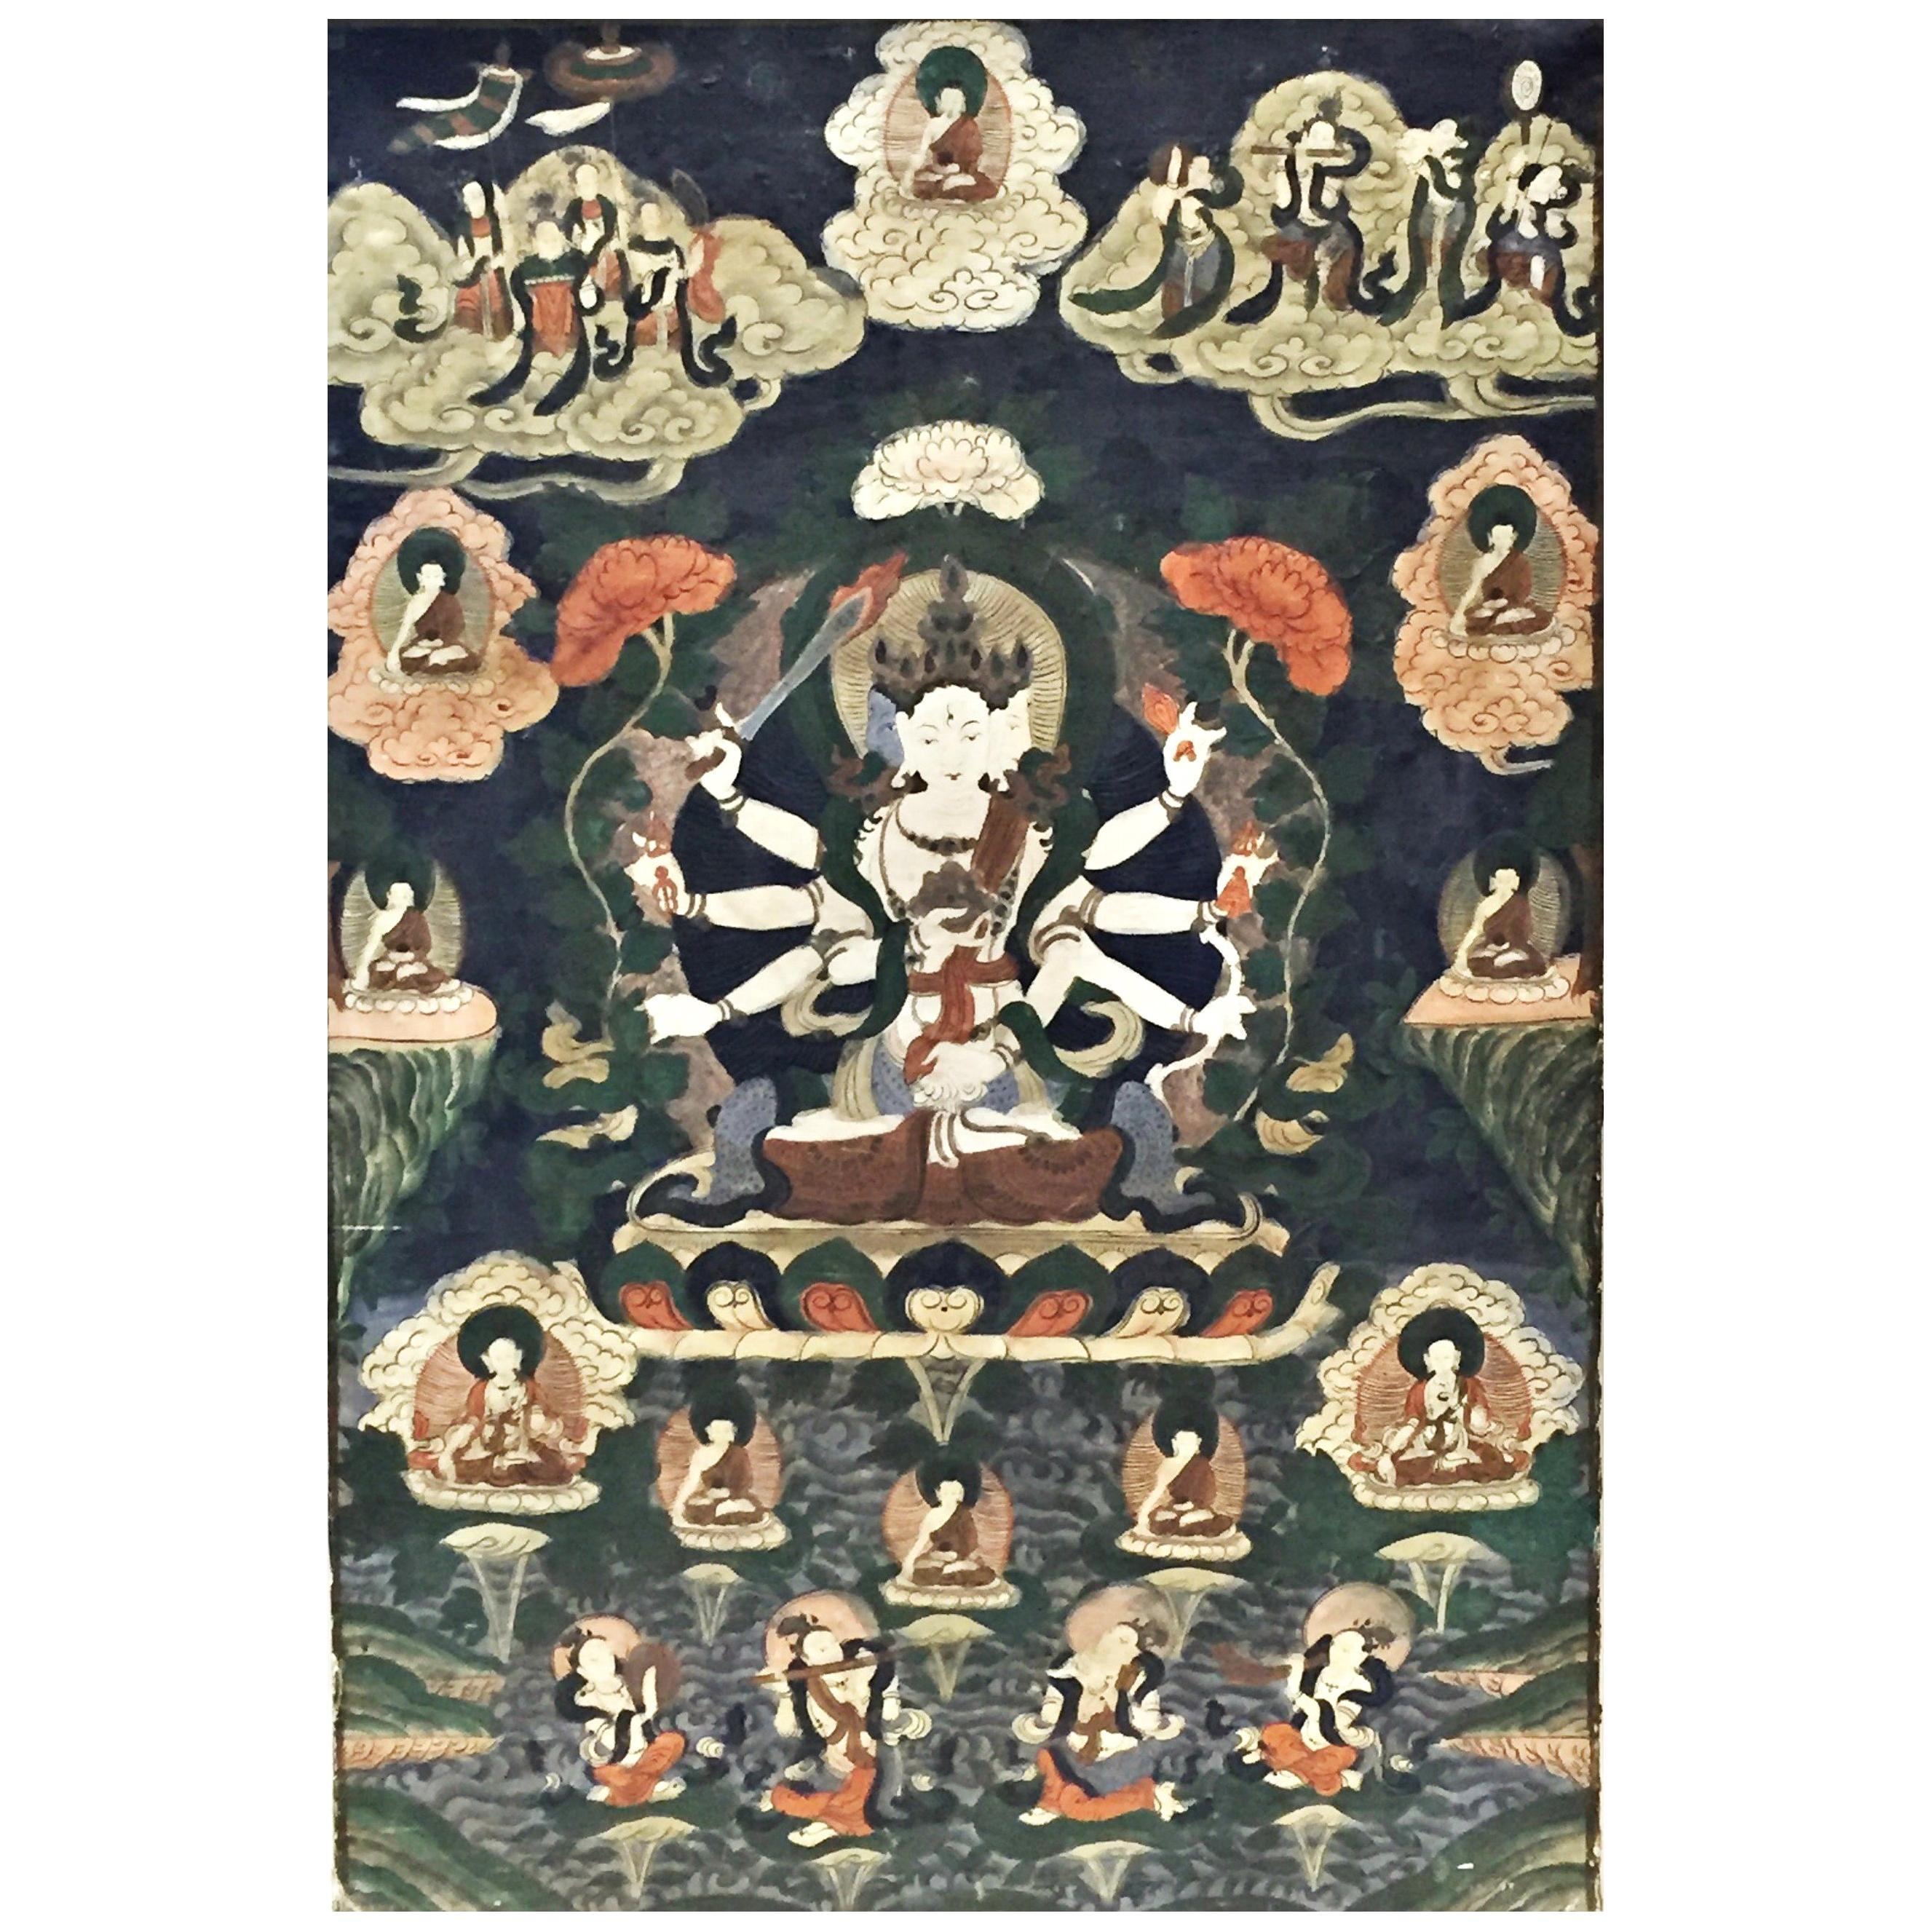 Deeds of Manjushri, Tibetan Thangka Natural Pigments on Cotton Painting